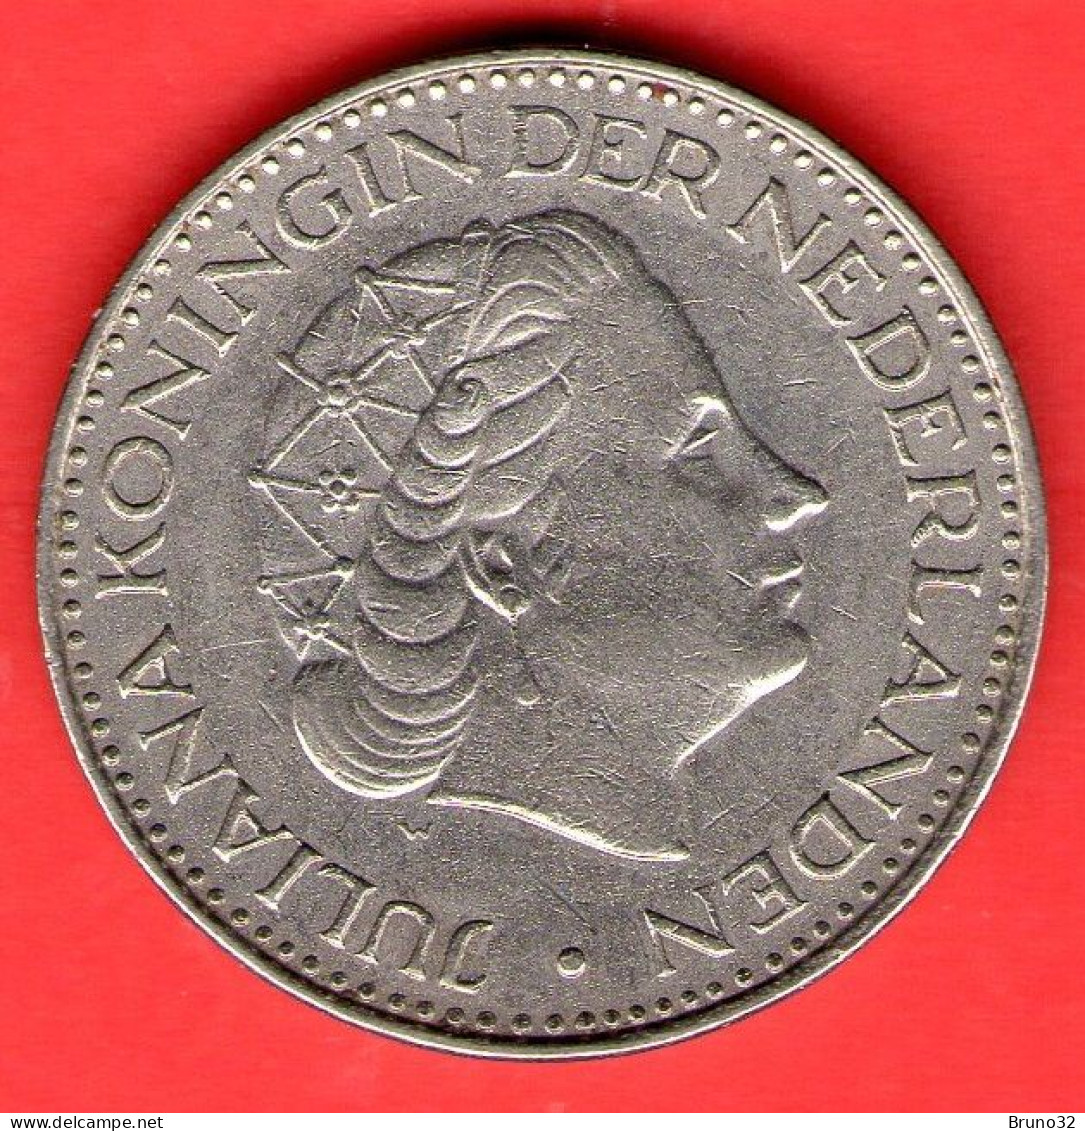 Paesi Bassi - Nederland - Pays Bas - 1969 - 1 Gulden - SPL/XF - Come Da Foto - 1948-1980 : Juliana